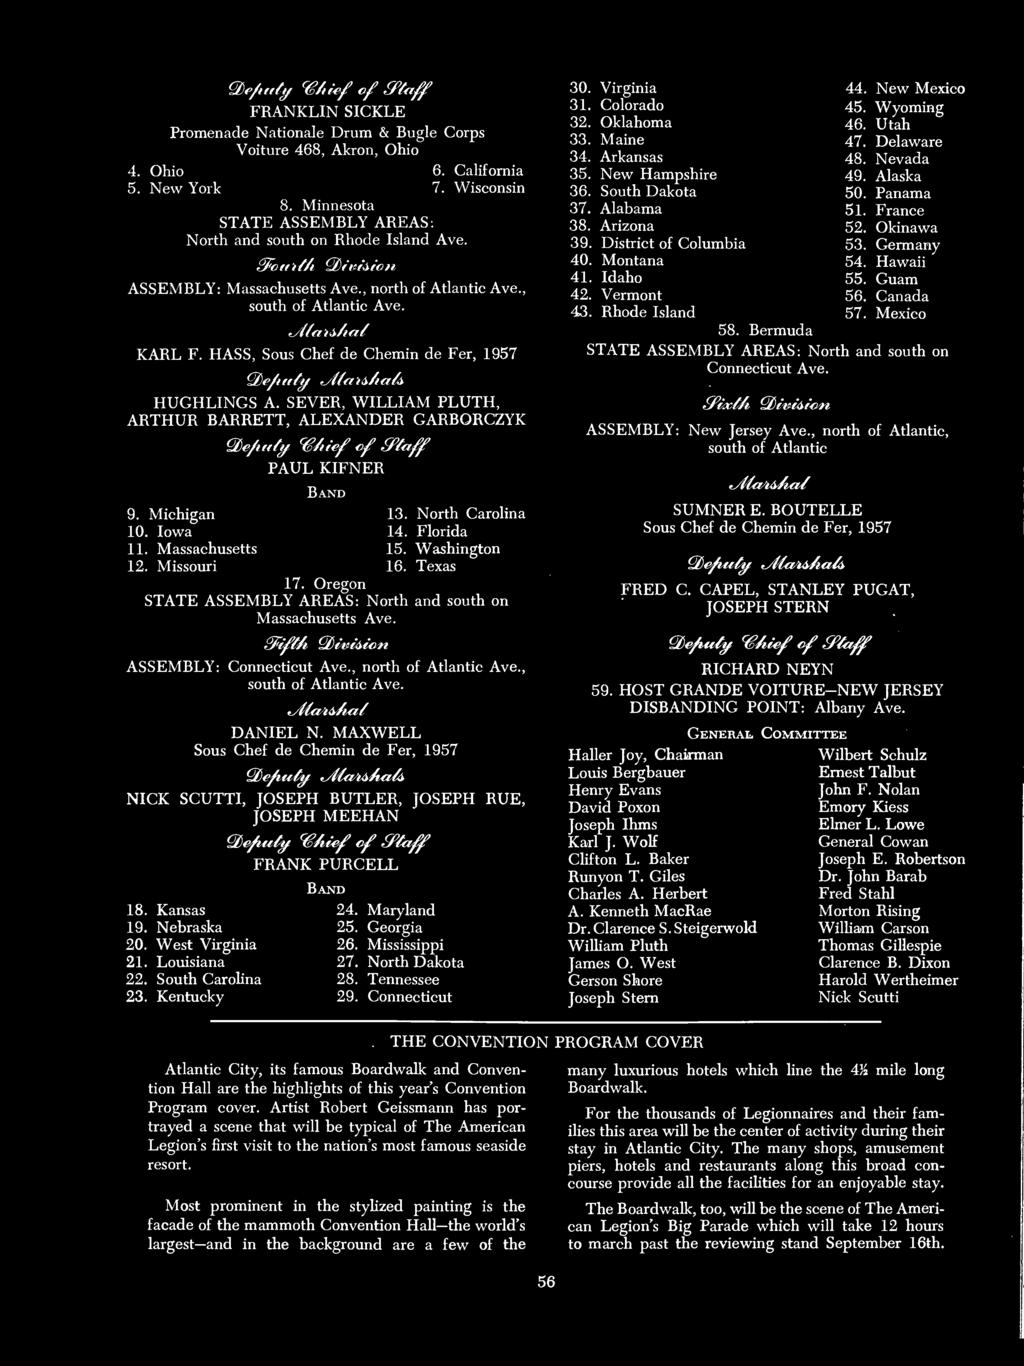 yttai^aa/ MAXWELL Sous Chef de Chemin de Fer, 1957 NICK SCUTTI, JOSEPH BUTLER, JOSEPH RUE, JOSEPH MEEHAN 18. Kansas 19. Nebraska 20. West Virginia 21. Louiana 22. South Carolina 23.